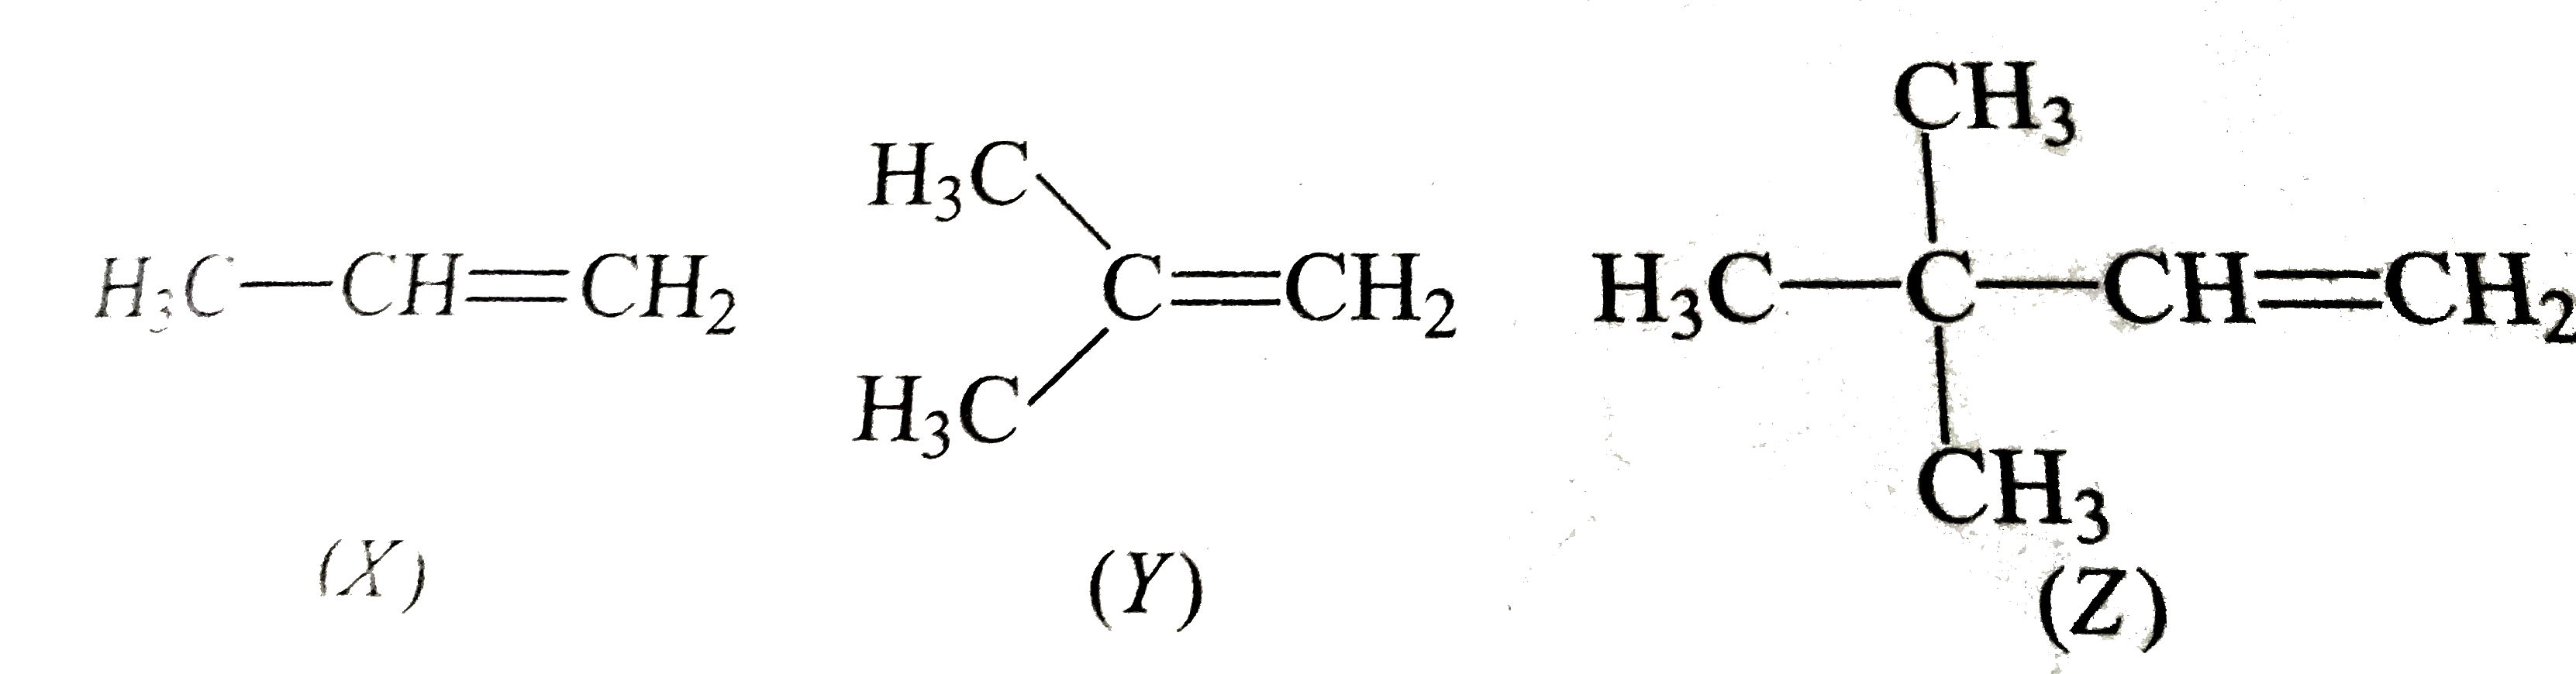 The reactivity of alkene      towards hydrogen is :